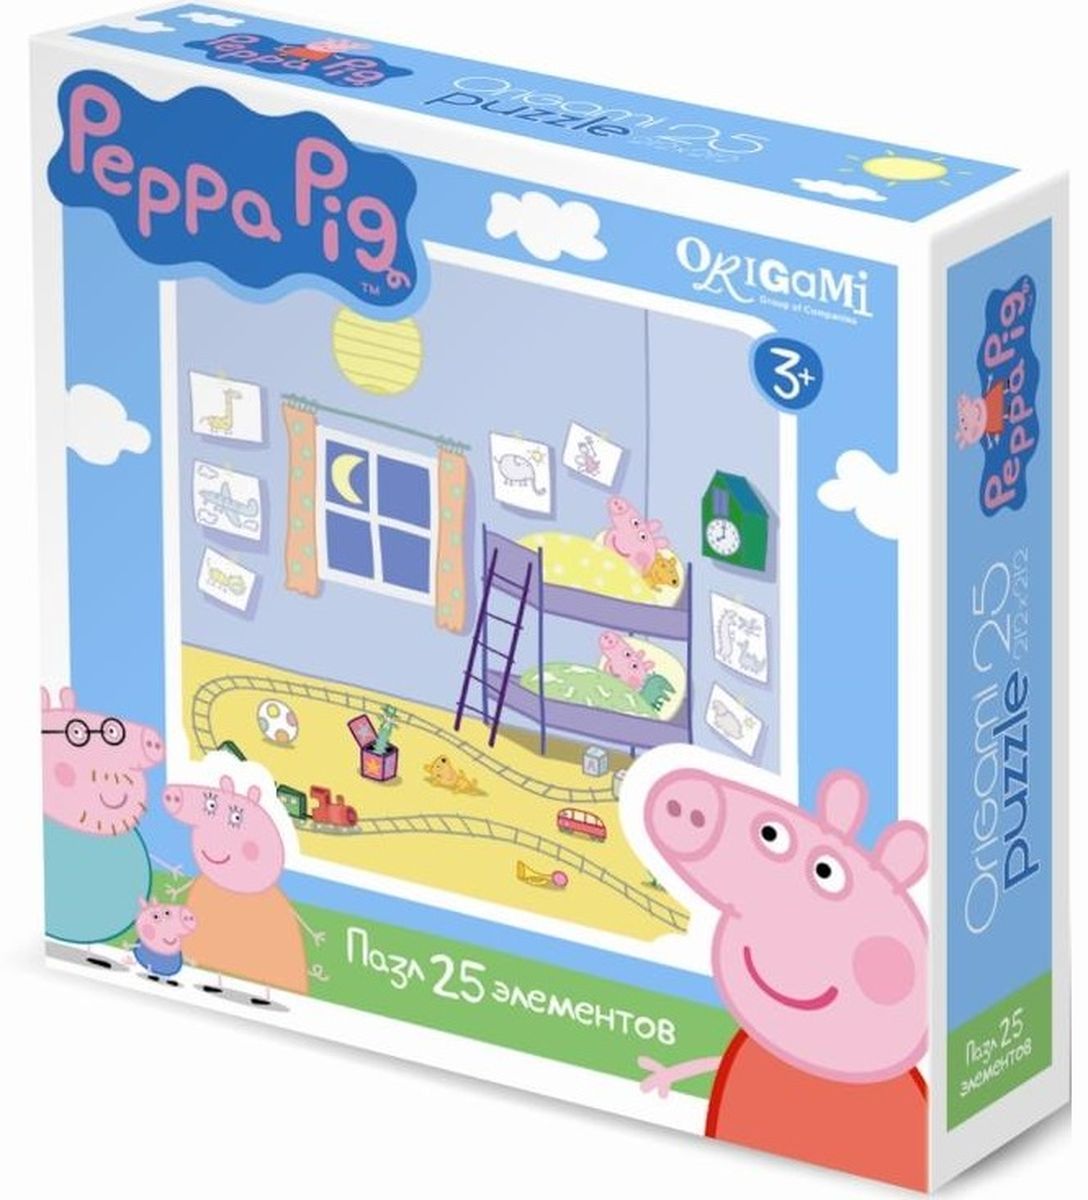     Peppa Pig 01582